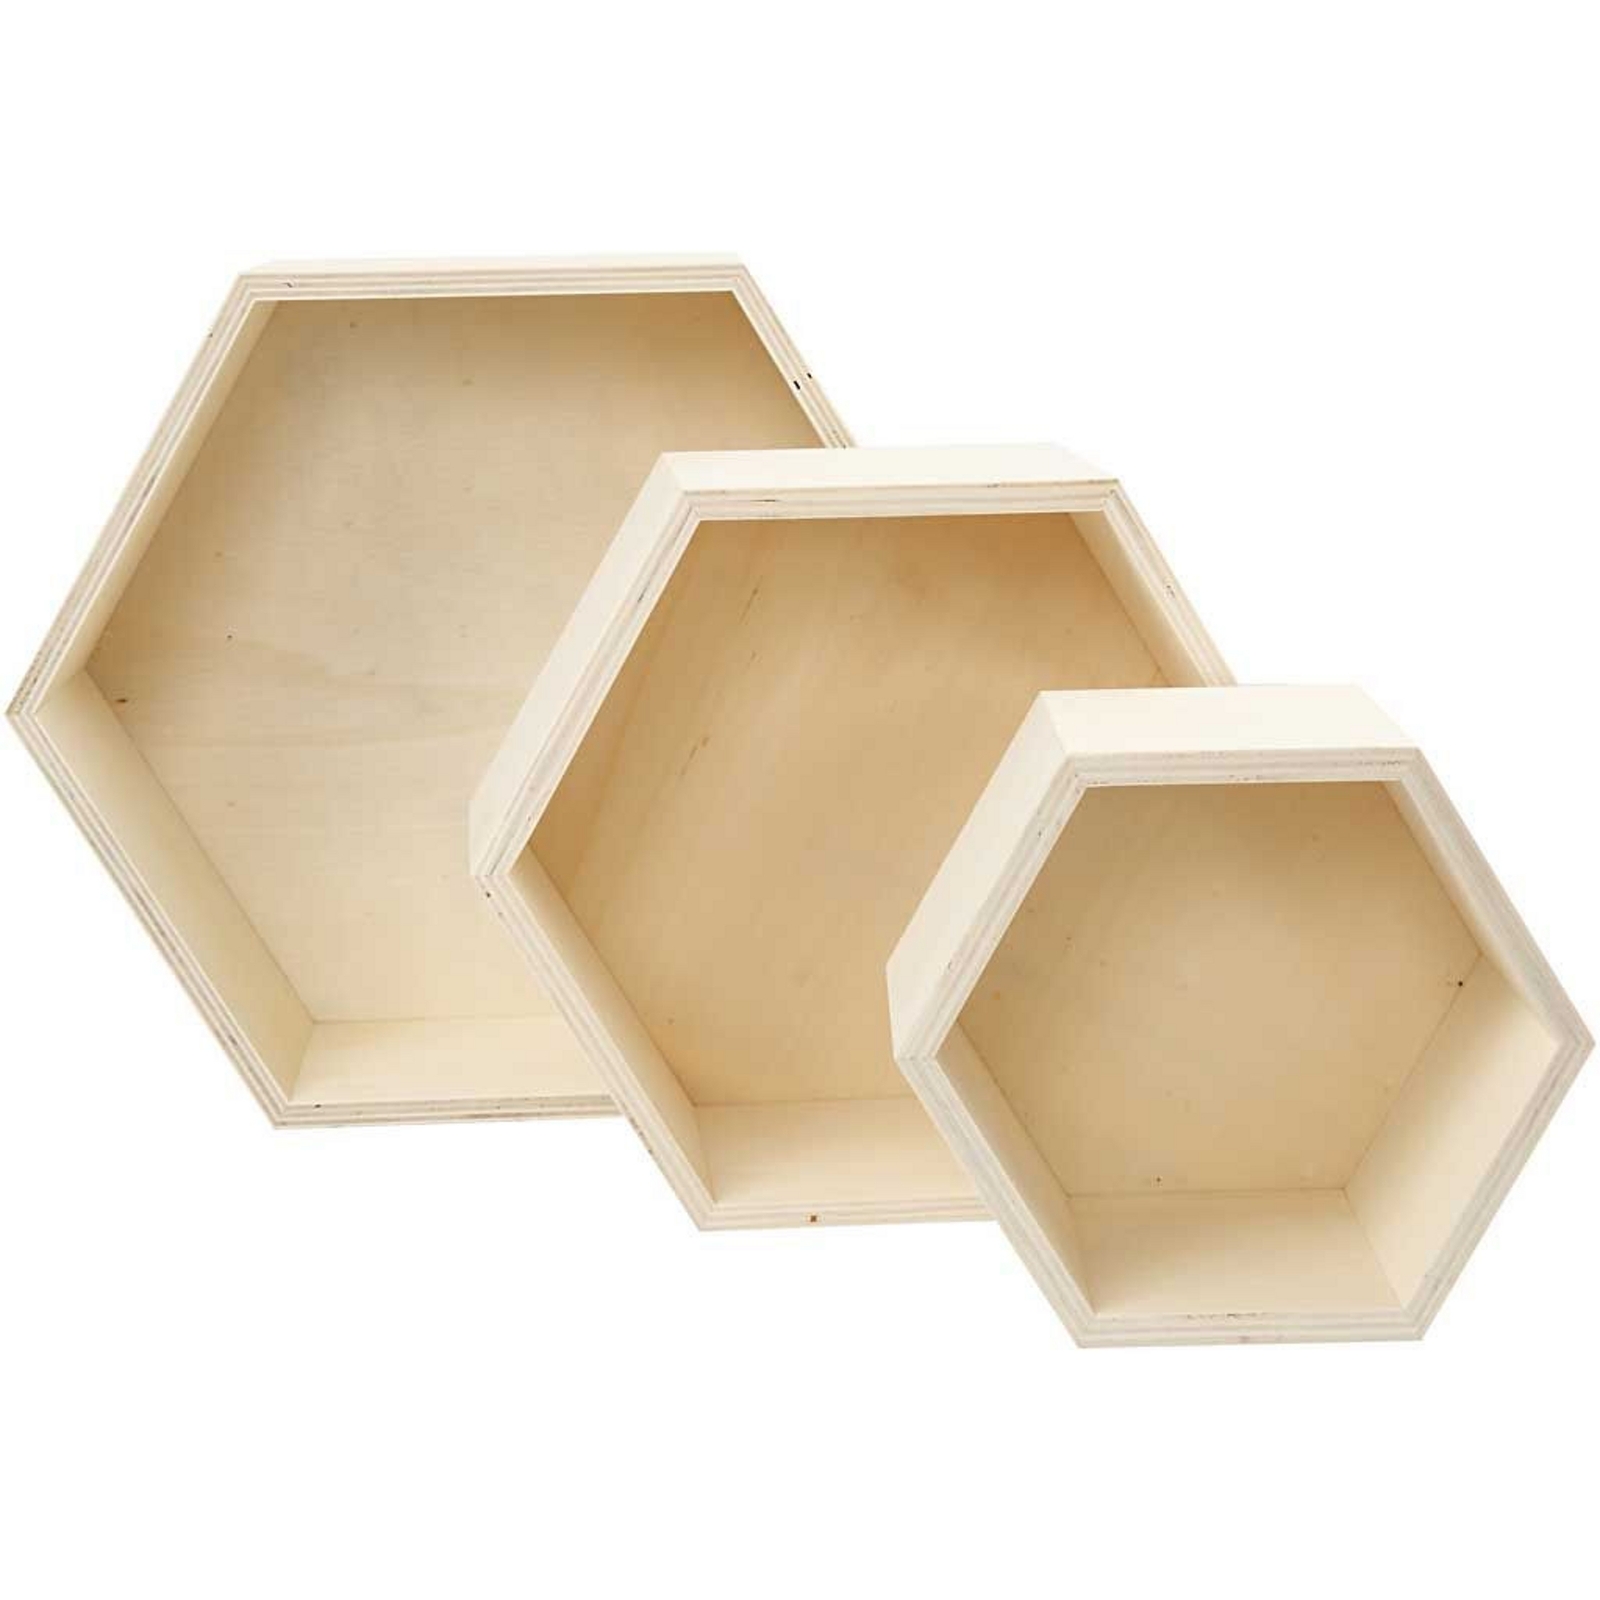 Hexagonal Storage Boxes - Pack x 3